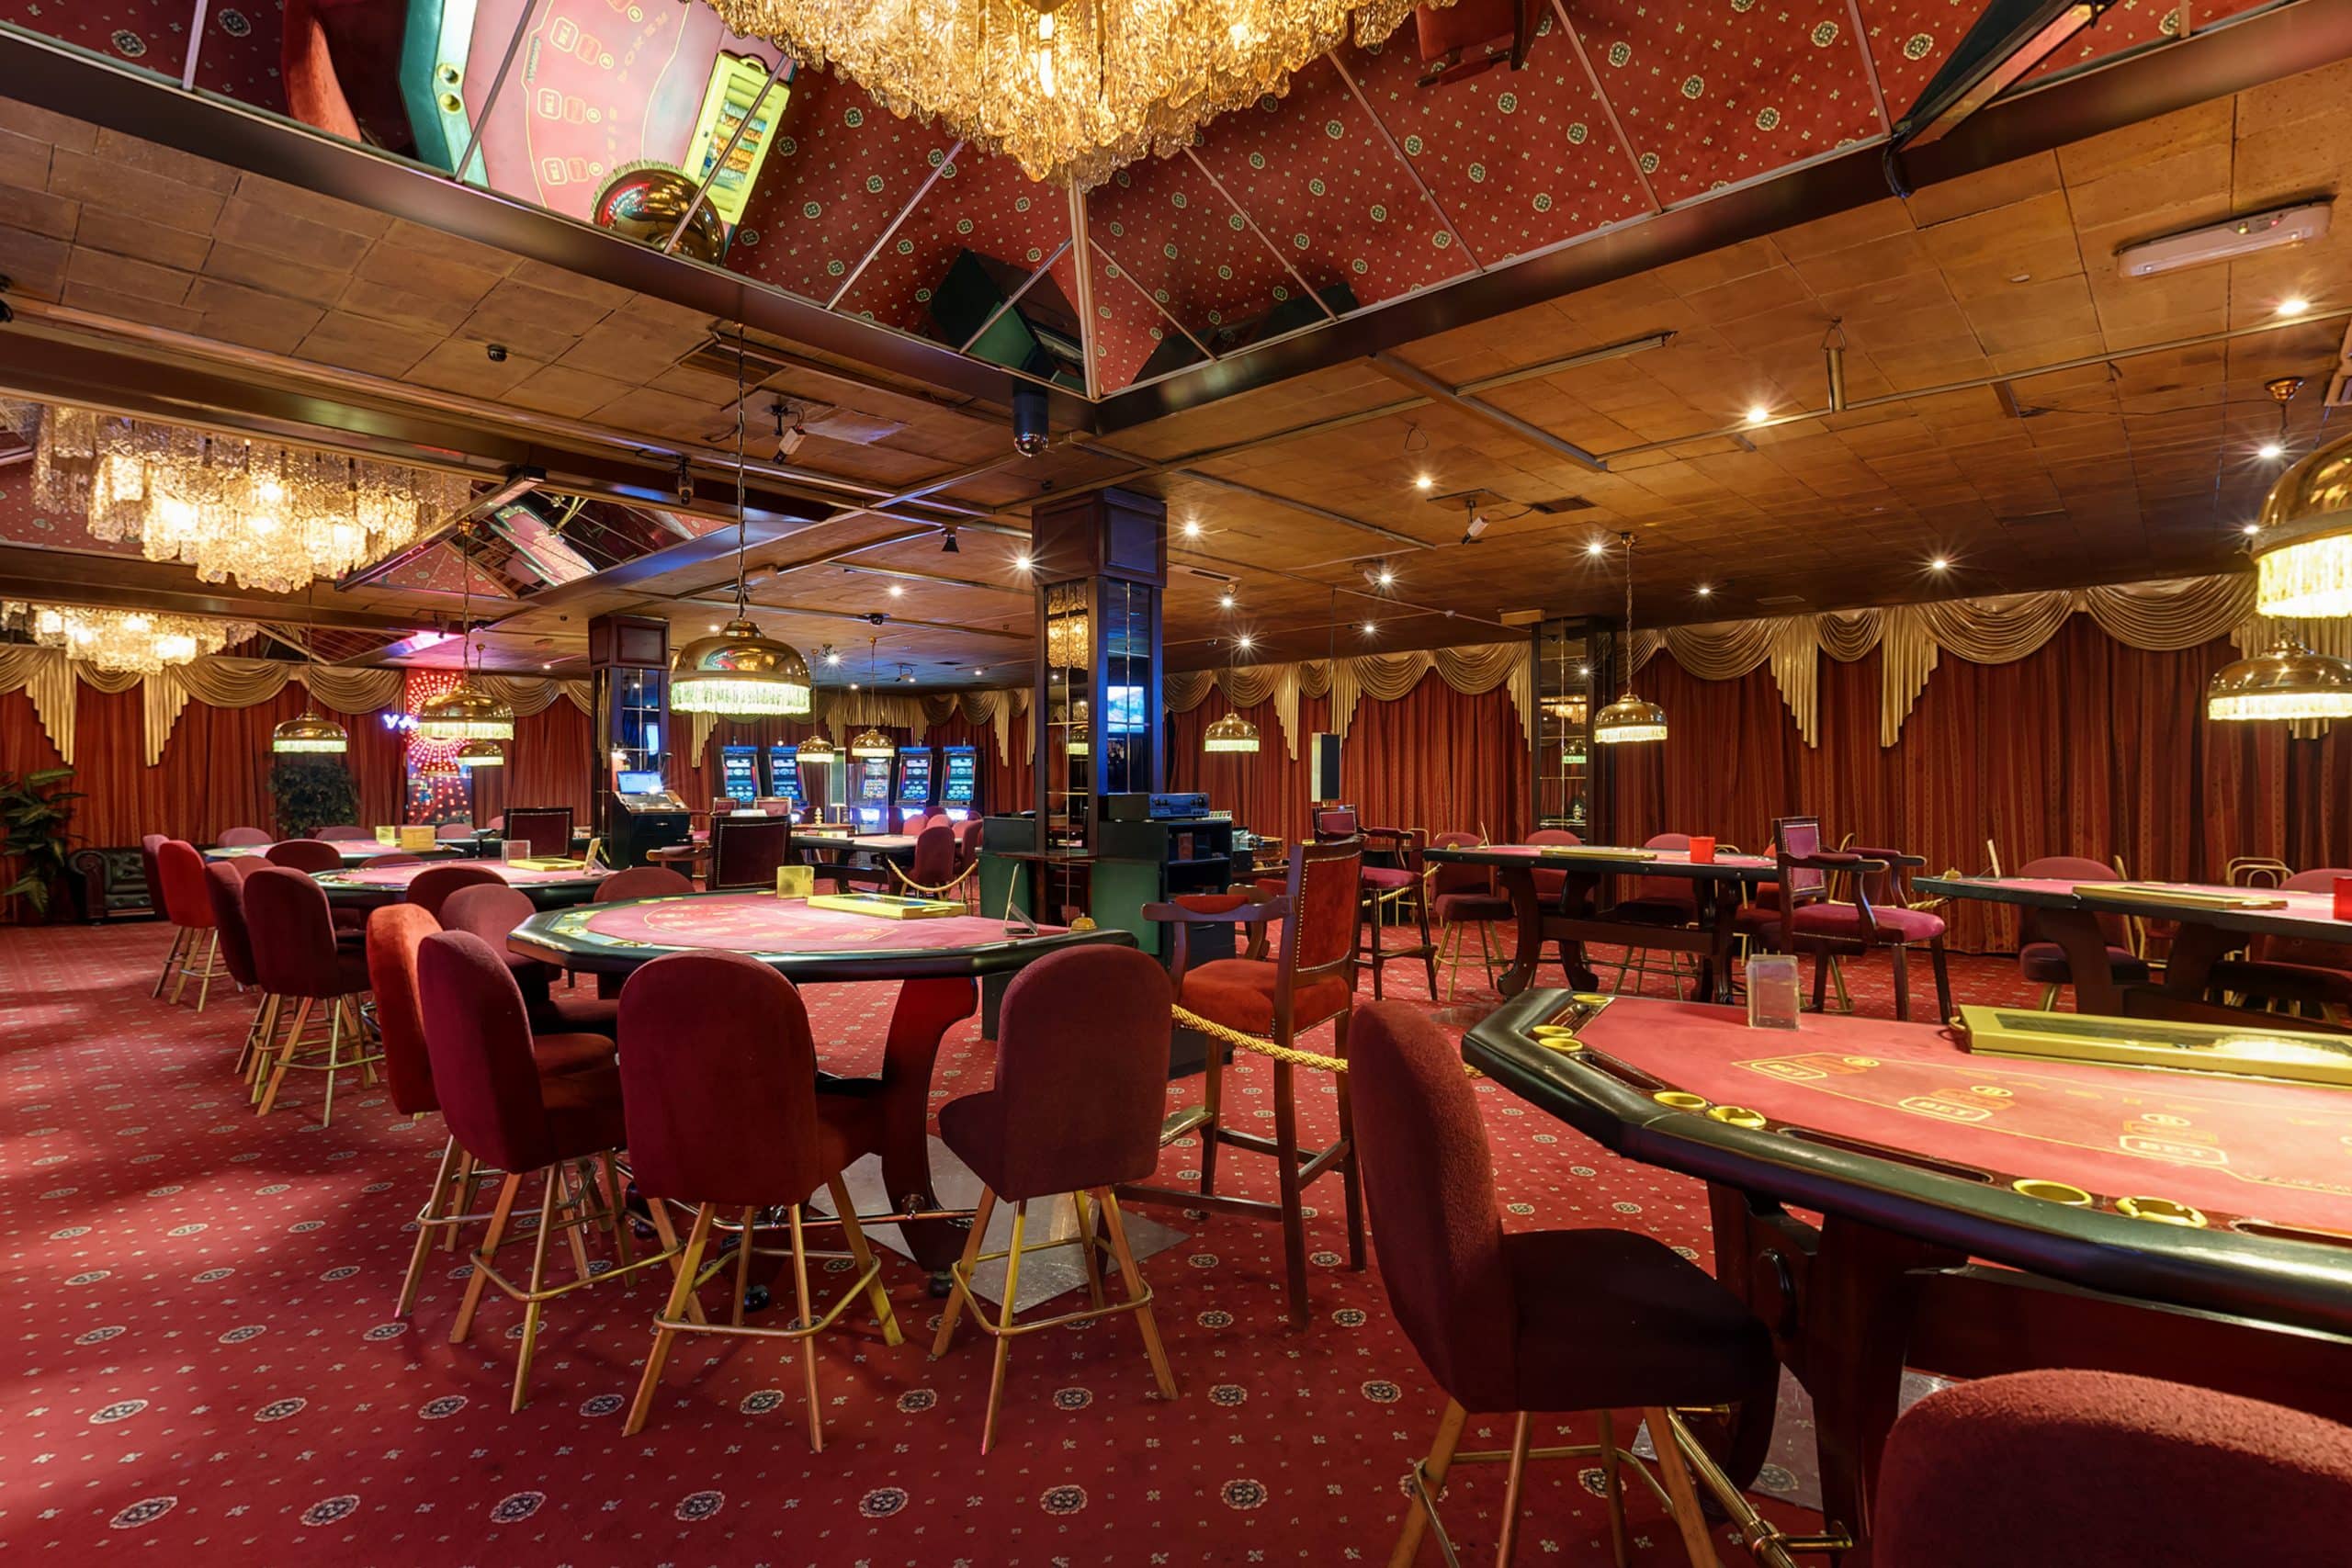 las vegas usa may 2017 interior elite luxury vip casino with rows gambling slots machine scaled